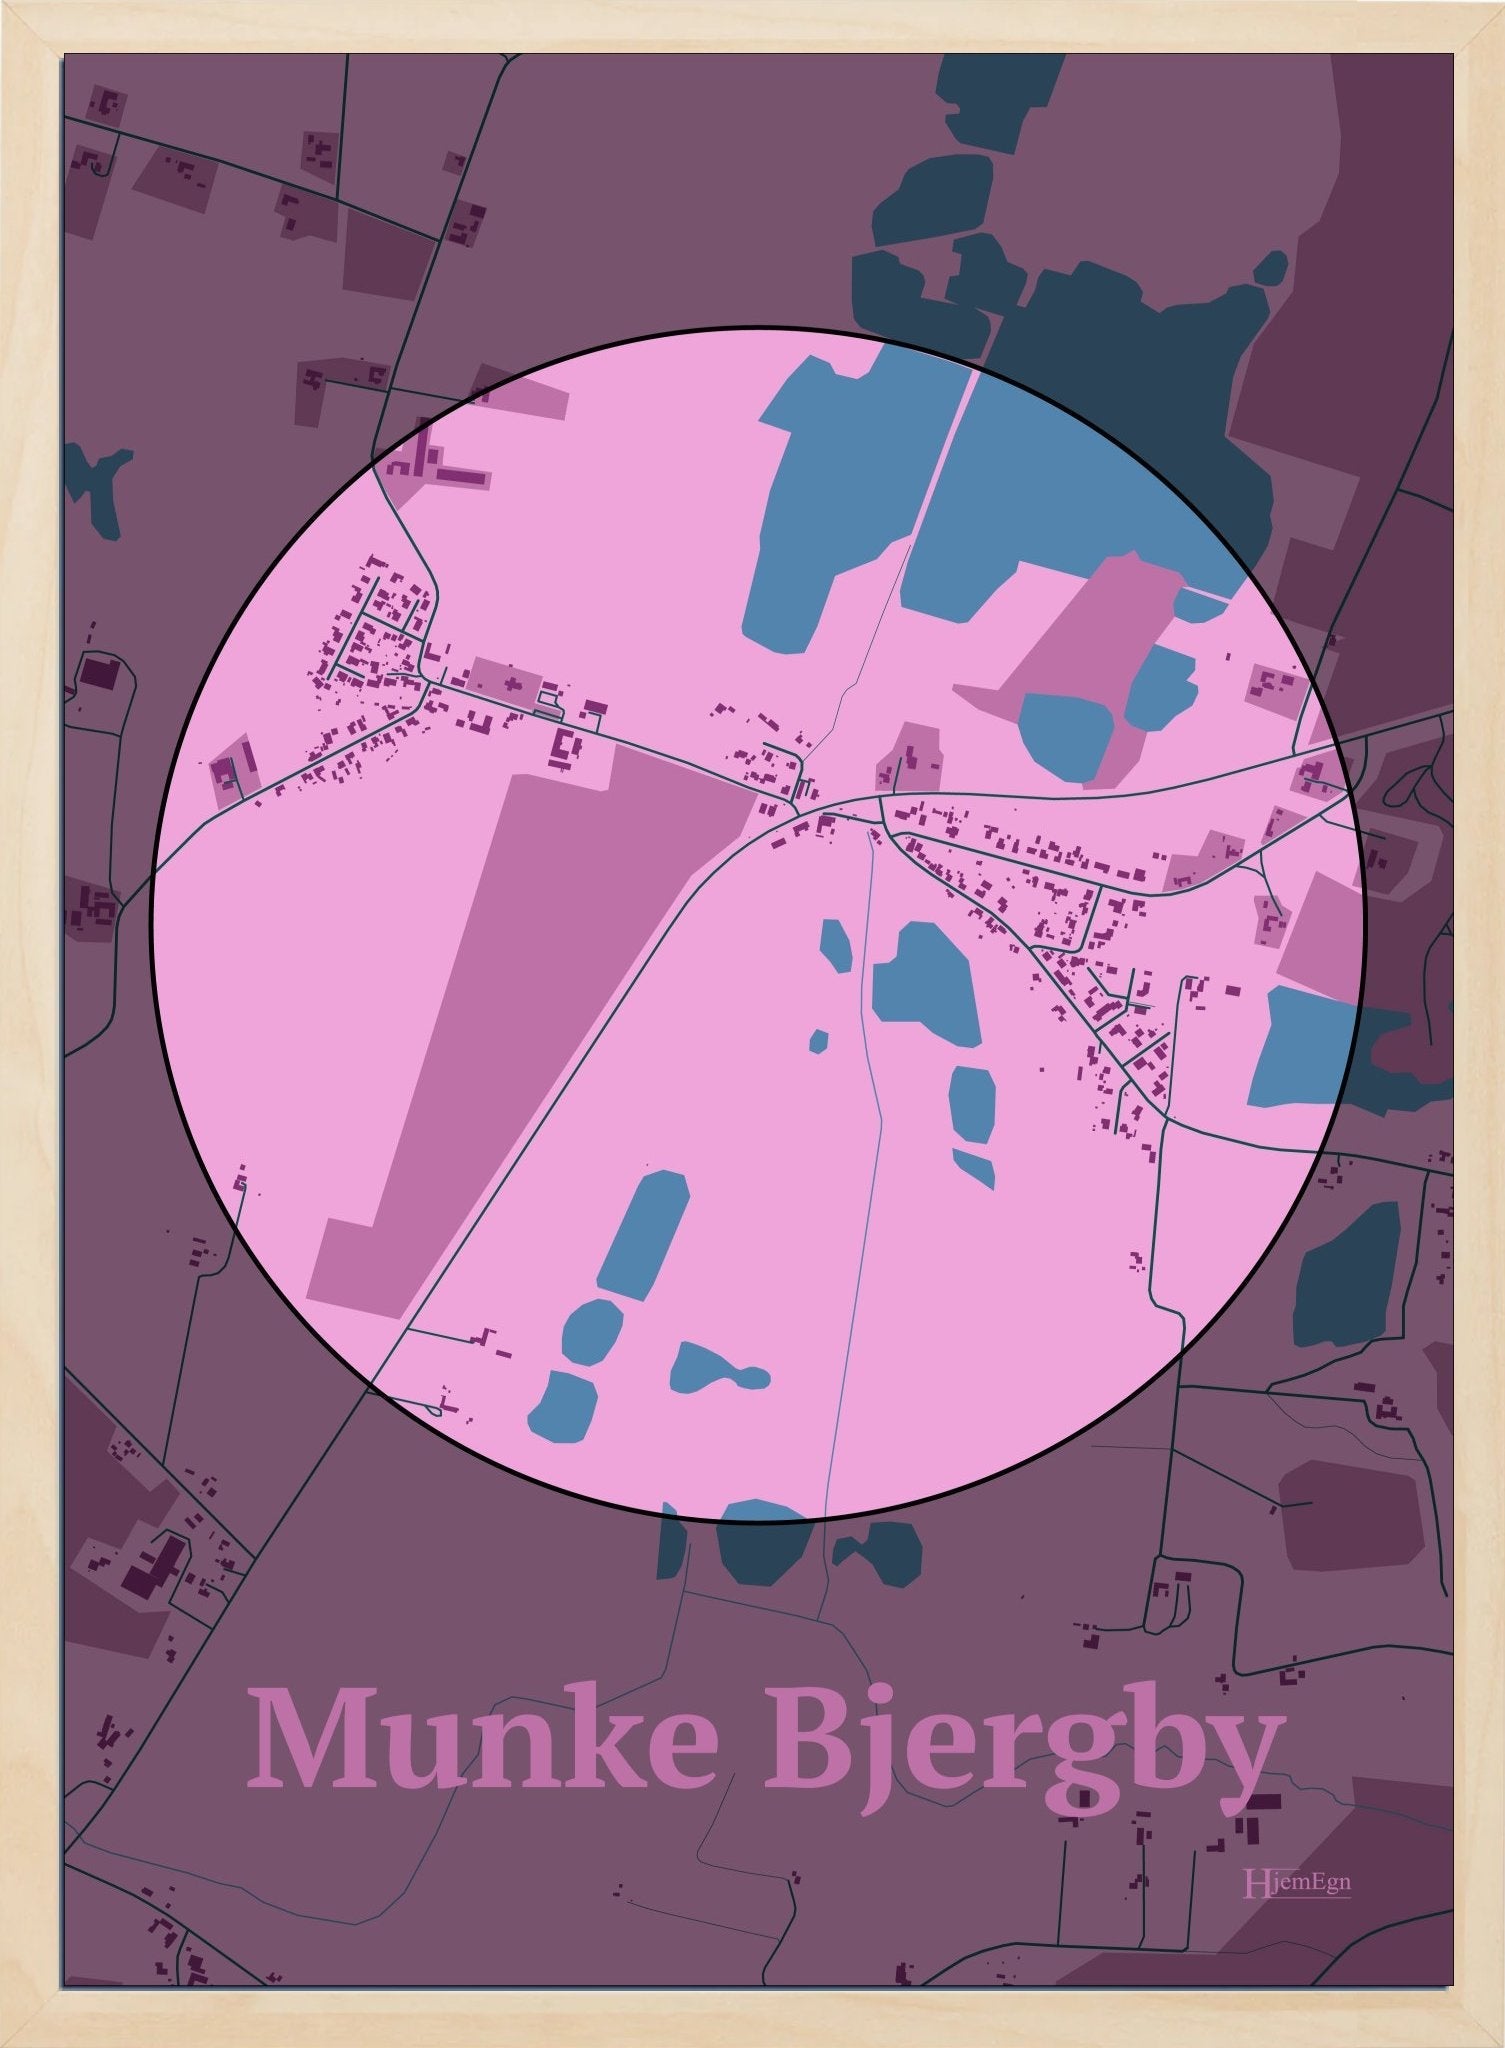 Munke Bjergby plakat i farve pastel rød og HjemEgn.dk design centrum. Design bykort for Munke Bjergby